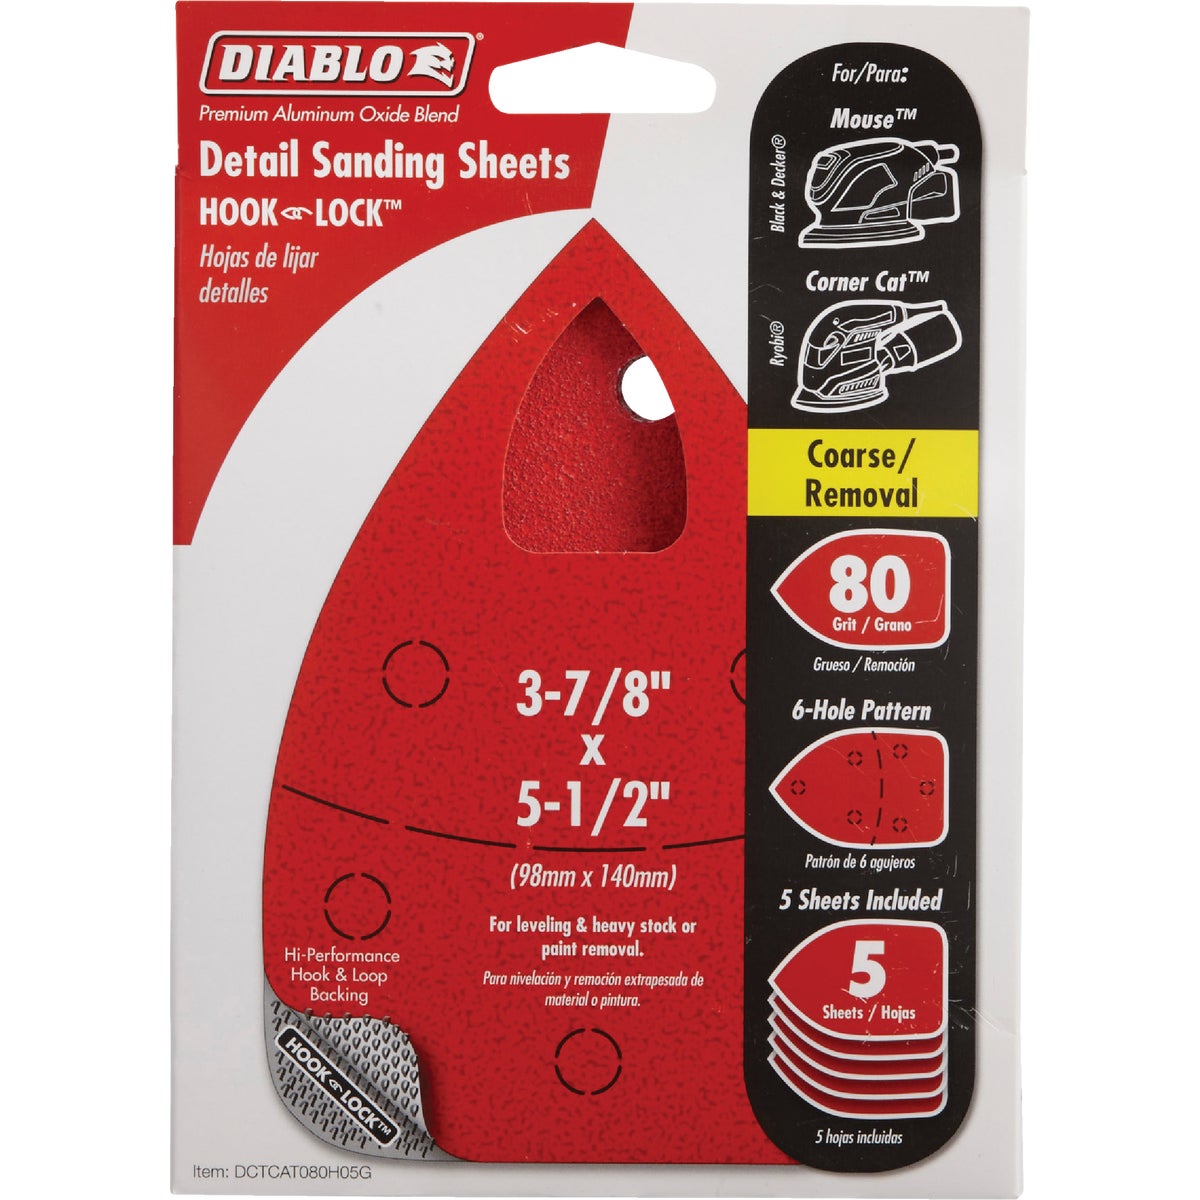 Diablo 80 Grit Mouse Sandpaper (5-Pack)